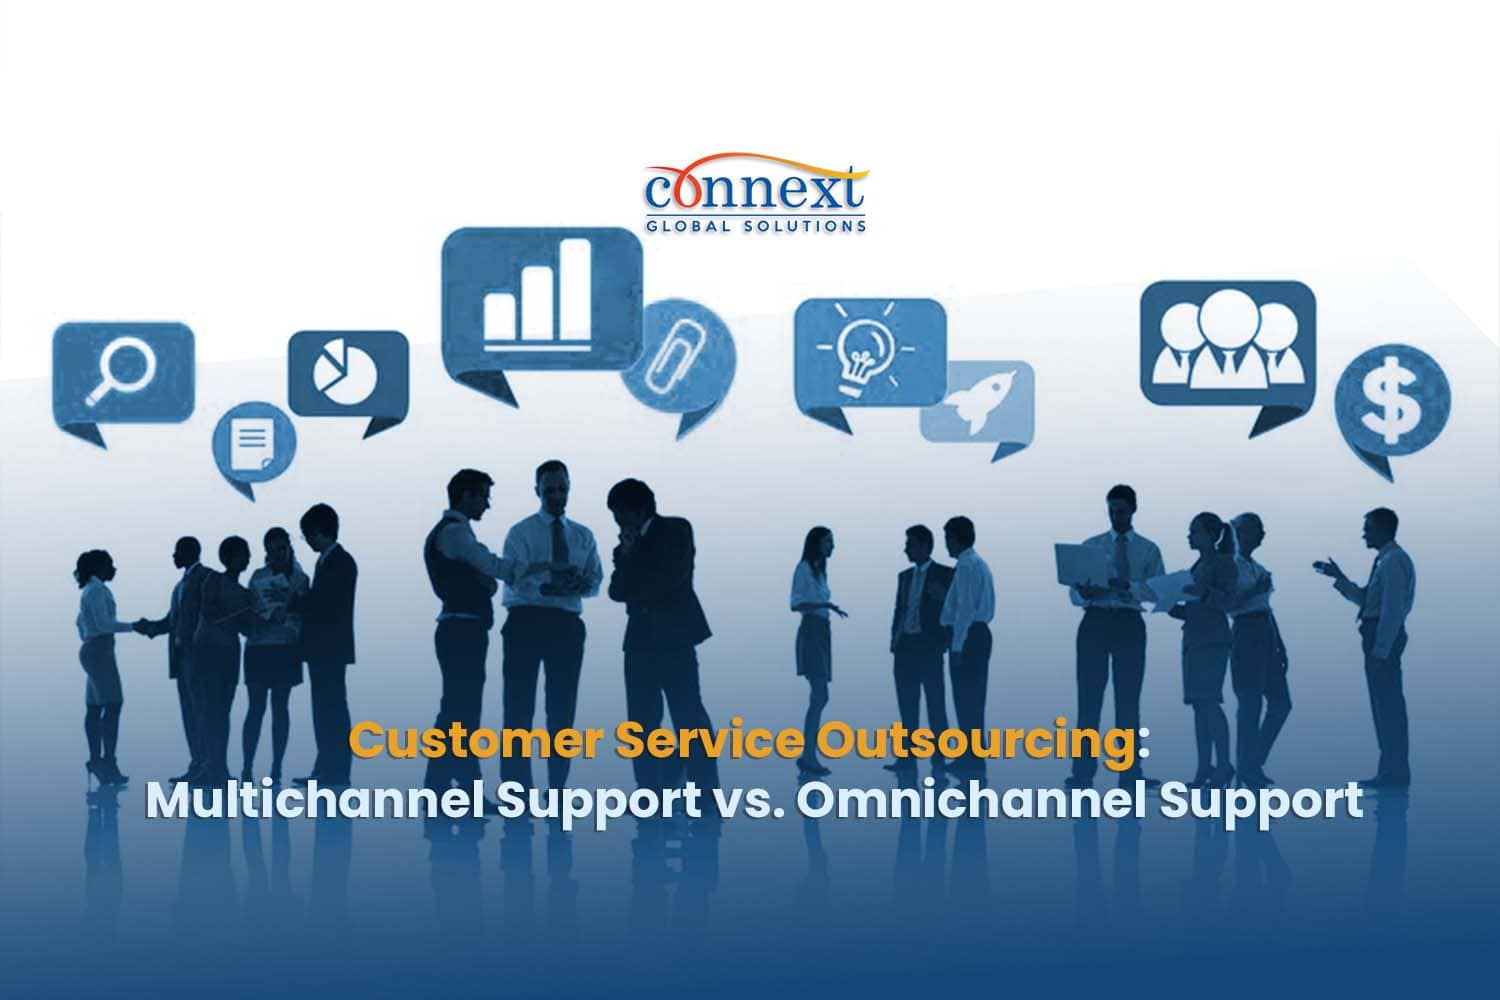 Customer Service Outsourcing: Multichannel Support vs. Omnichannel Support